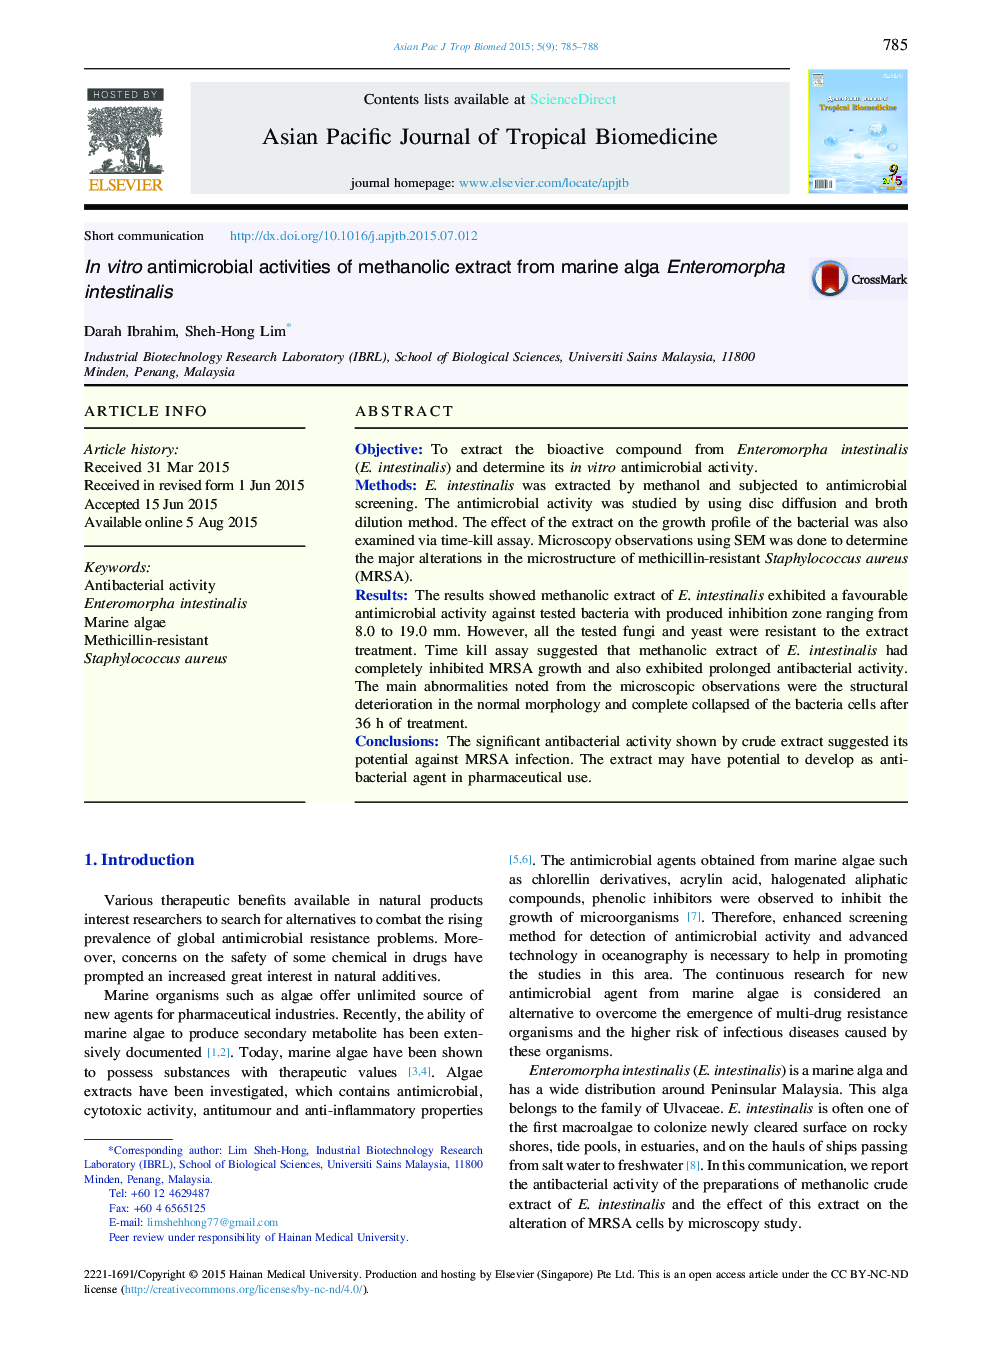 In vitro antimicrobial activities of methanolic extract from marine alga Enteromorpha intestinalis 